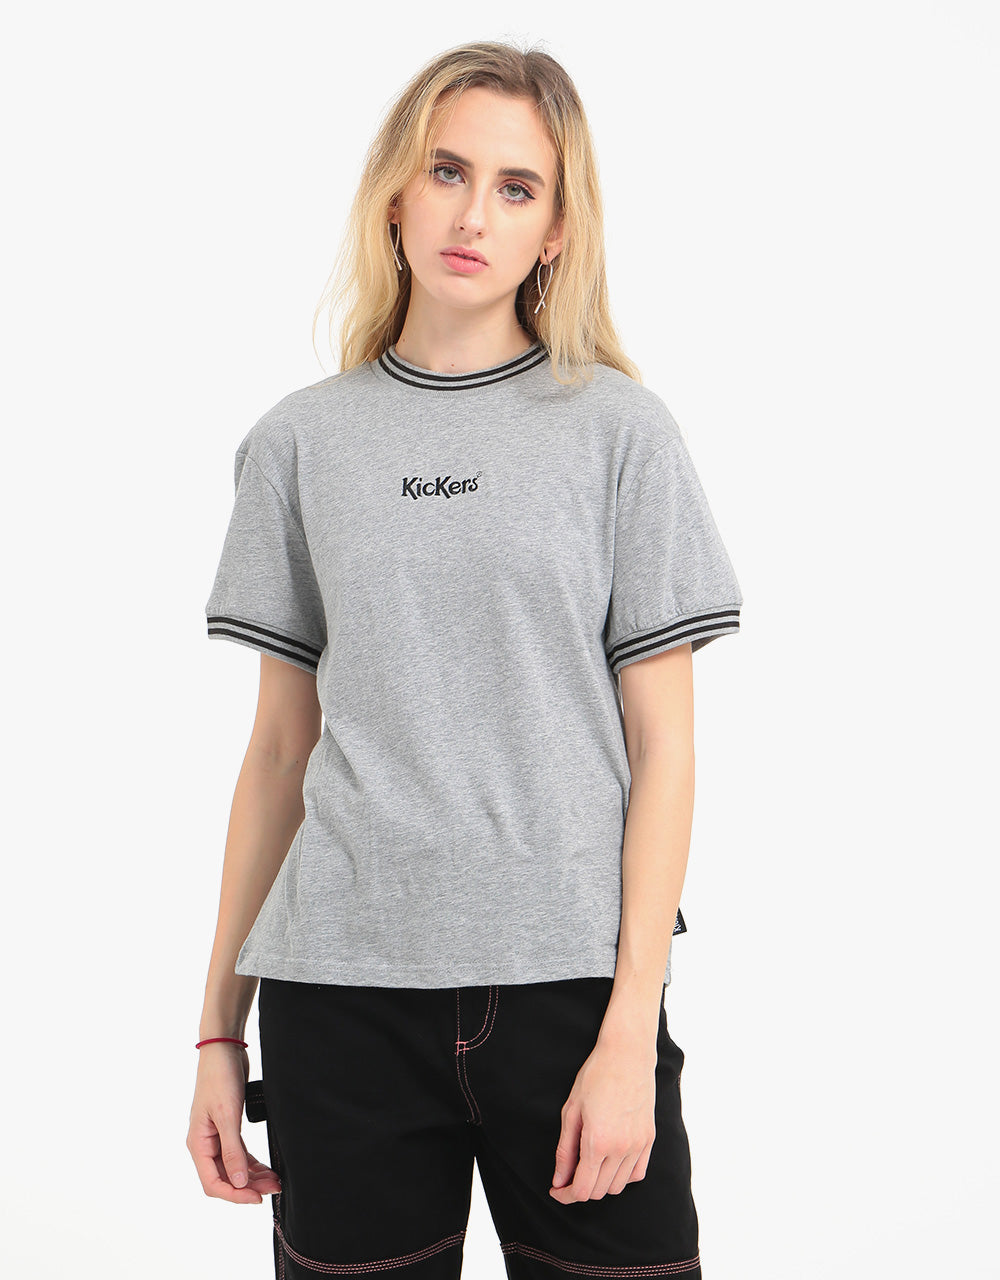 Kickers® Womens S/S T-Shirt - Grey Marl